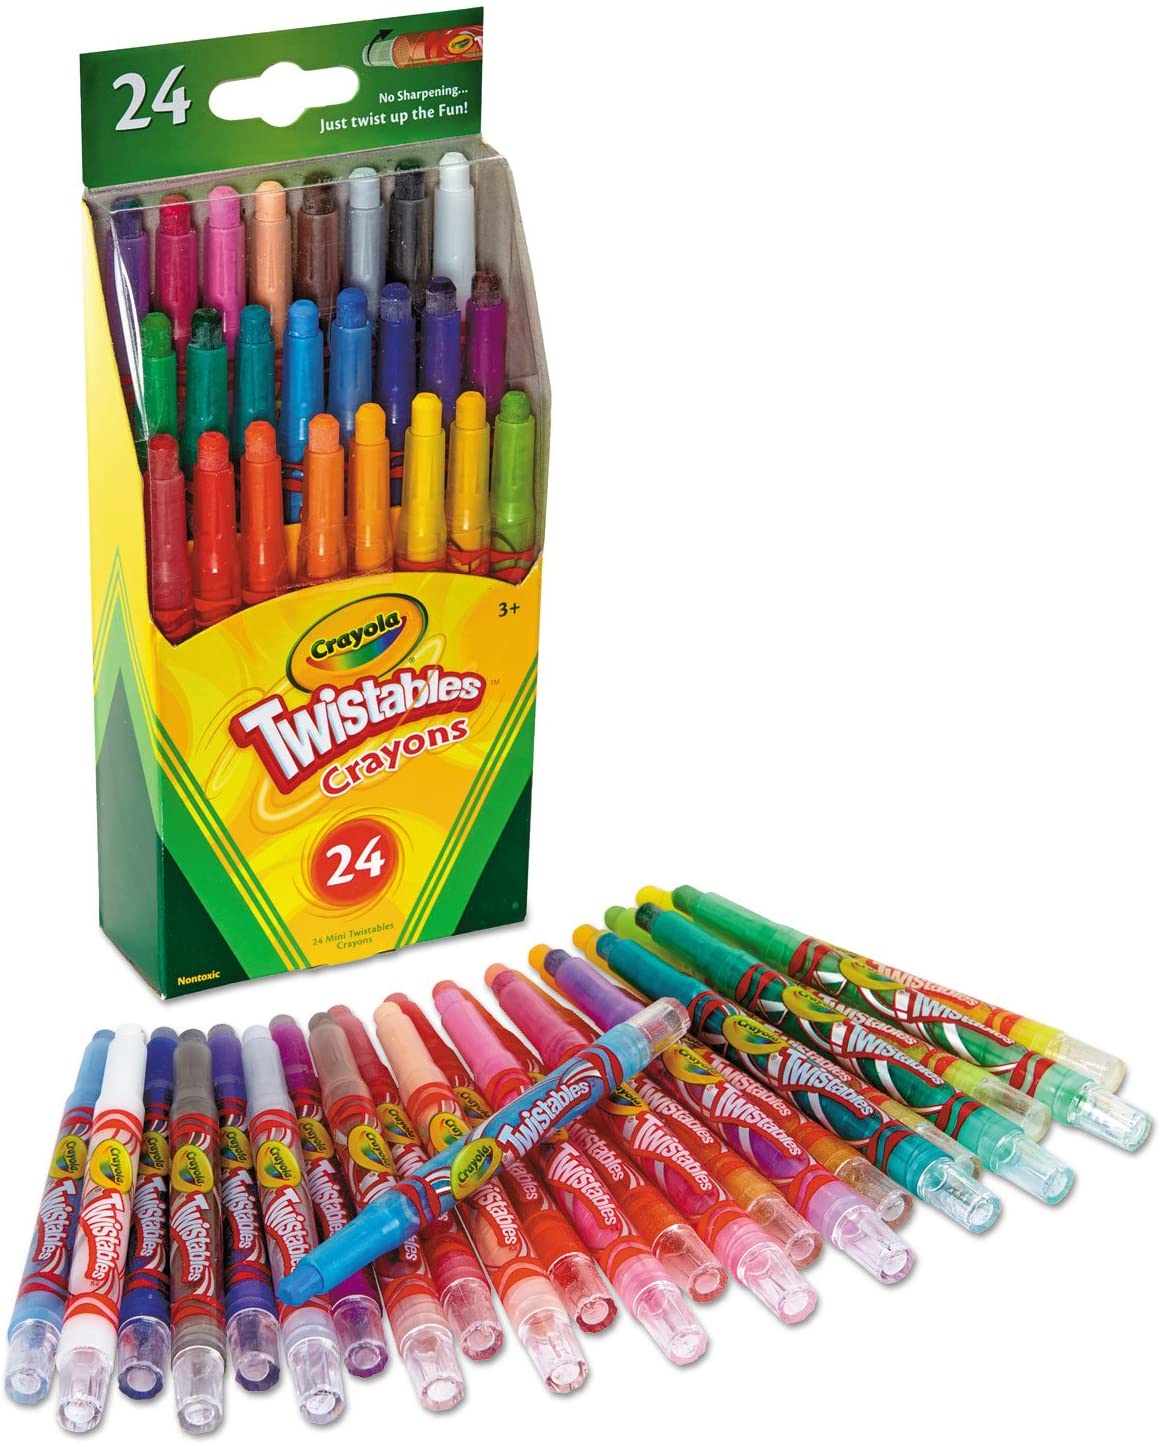 Crayola 24 Regular Size Crayon Sets, Assorted Classic Colors - 24